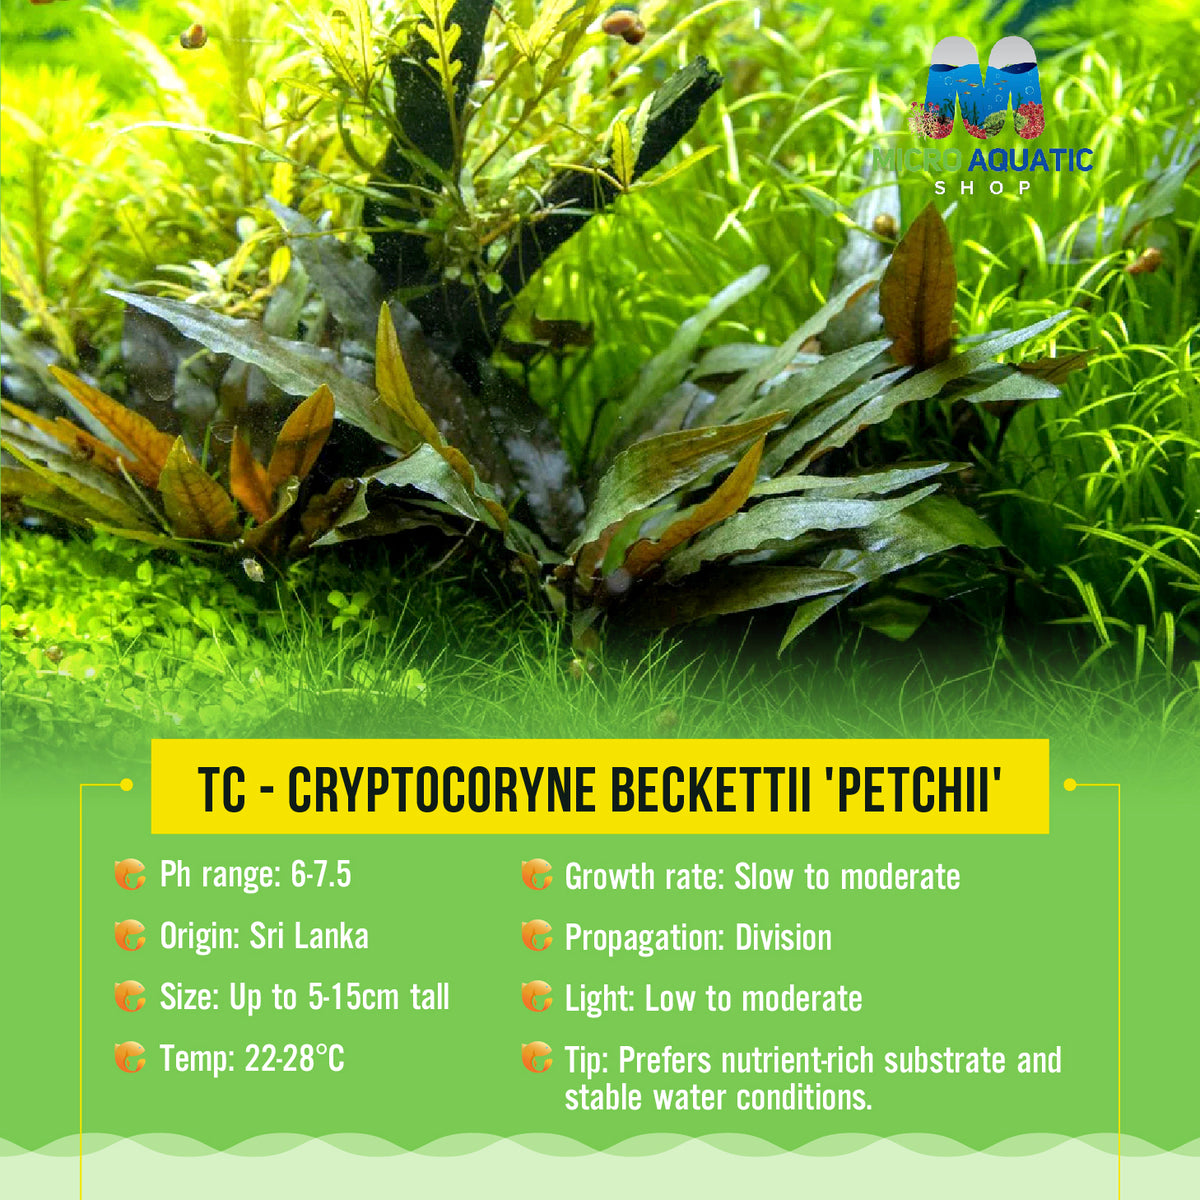 TC - Cryptocoryne beckettii 'Petchii'